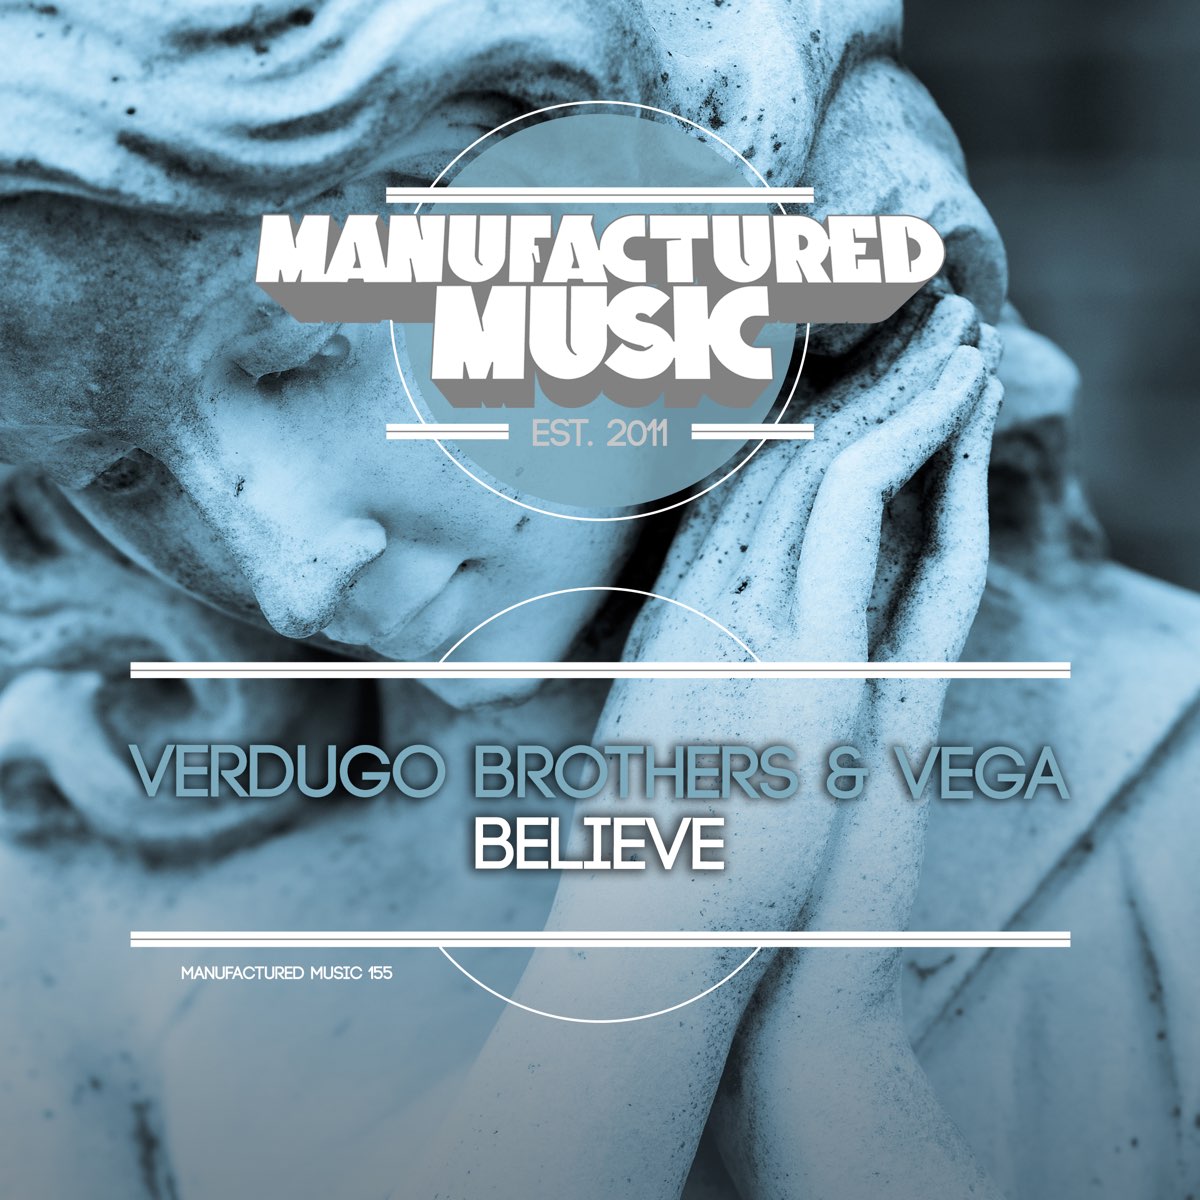 Музыка верили в любовь. Vega brothers. Vega музыка. Manufacture музыка. Believe Music.